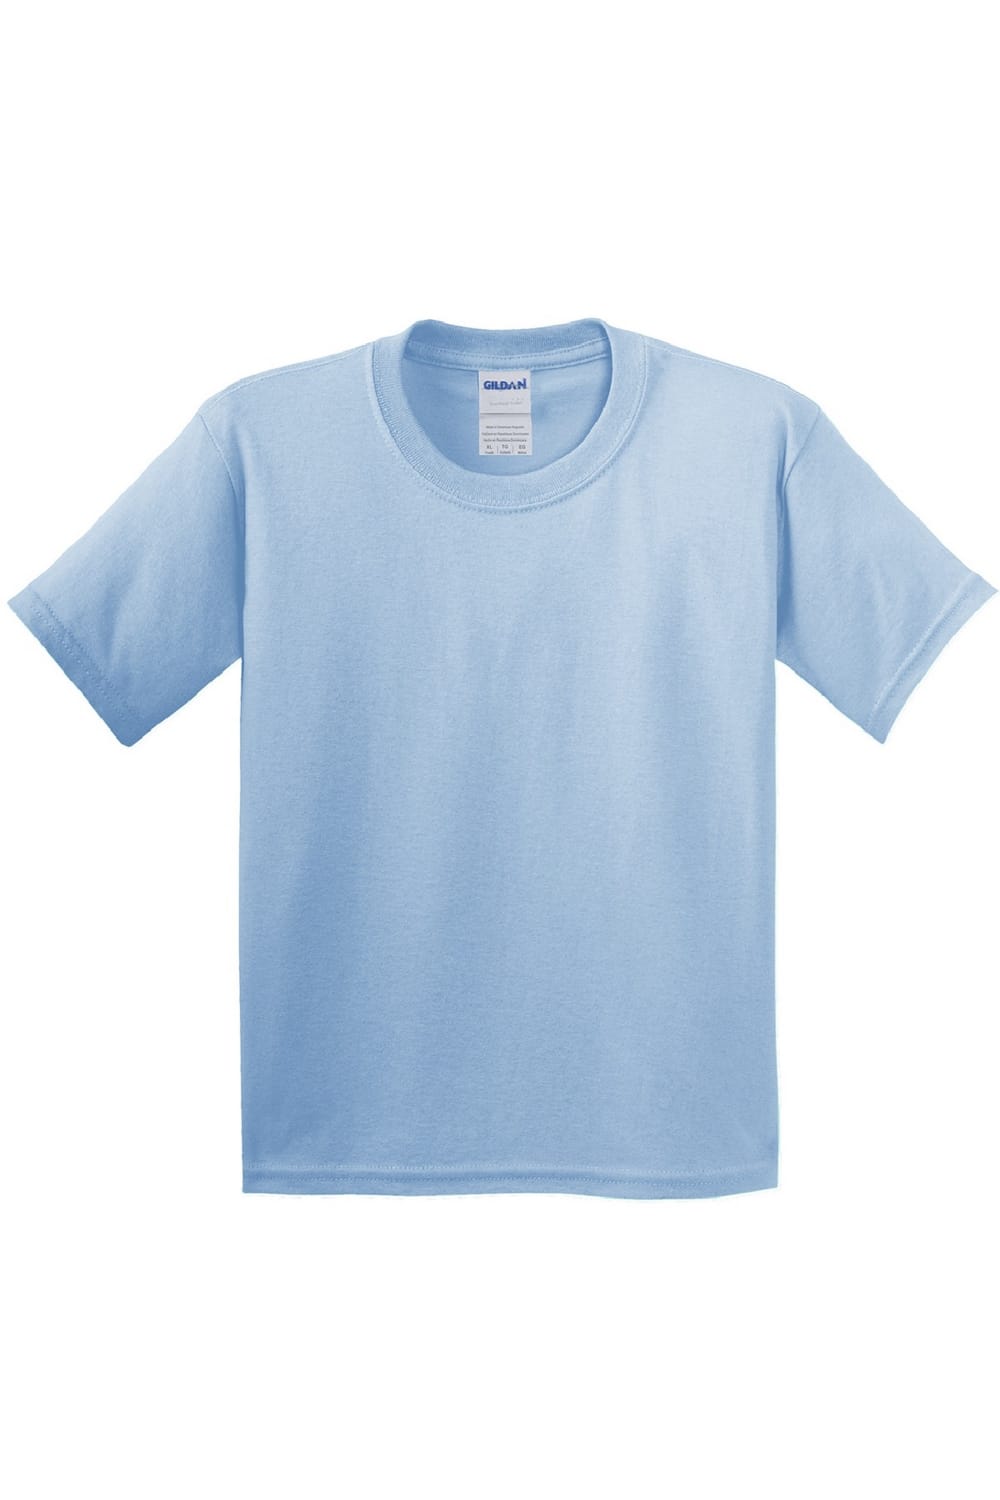 Gildan Childrens Unisex Soft Style T-Shirt